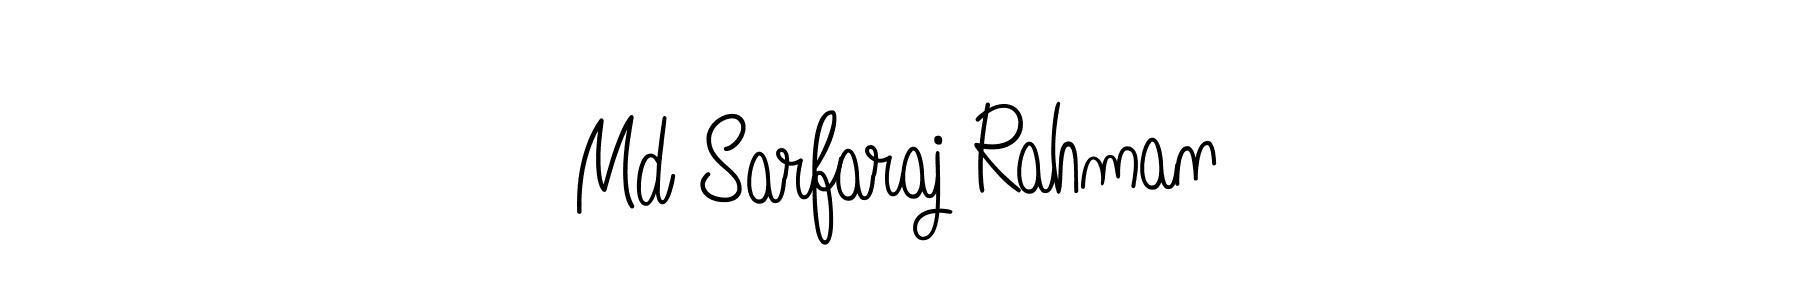 How to Draw Md Sarfaraj Rahman signature style? Angelique-Rose-font-FFP is a latest design signature styles for name Md Sarfaraj Rahman. Md Sarfaraj Rahman signature style 5 images and pictures png